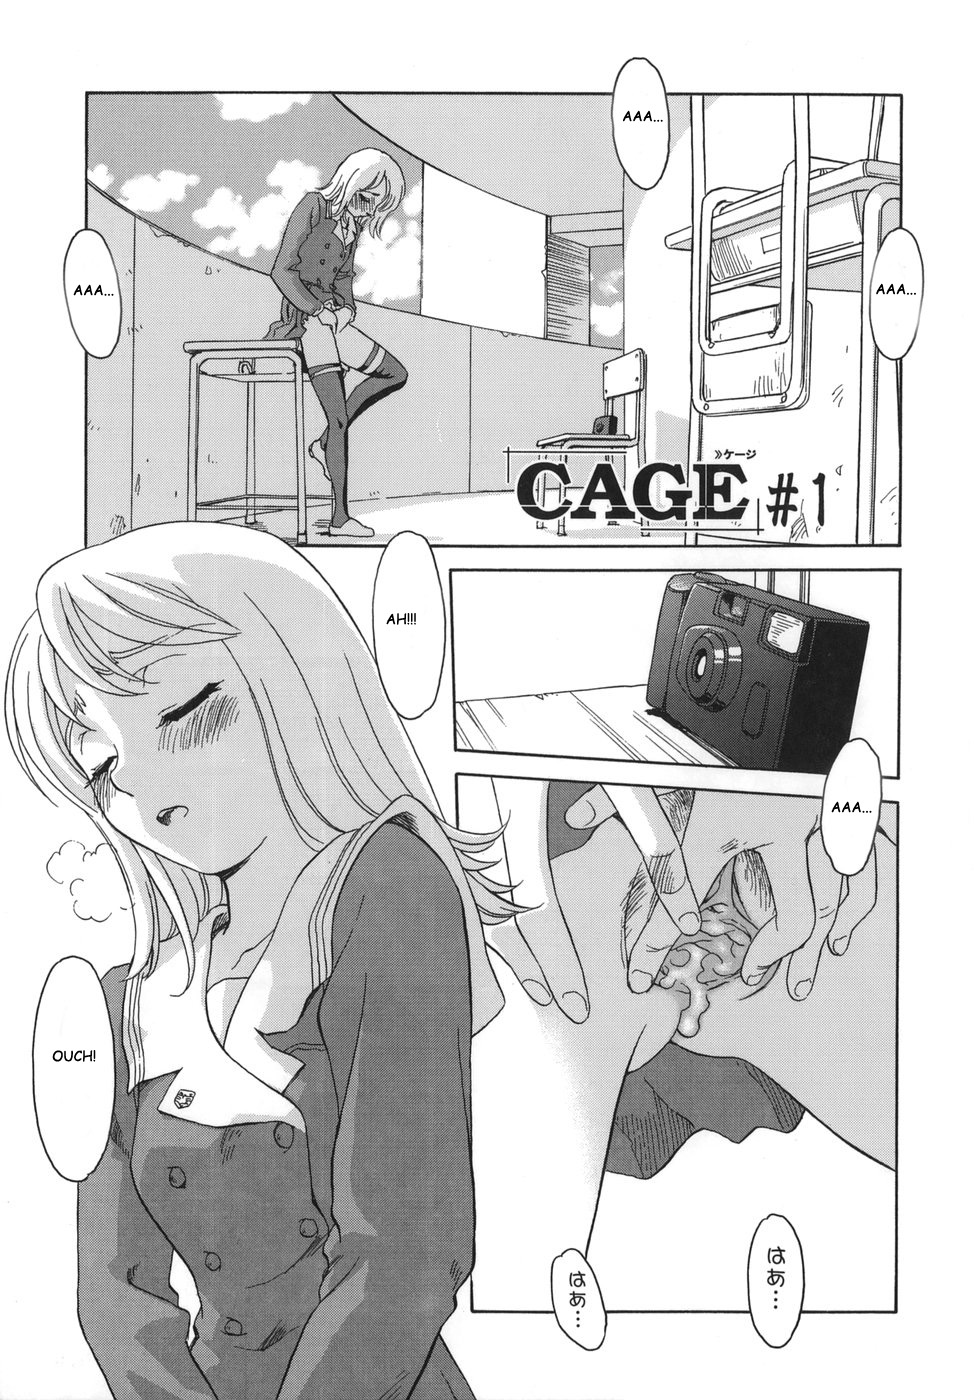 [Suehirogari] Cage chapter 1 [Polish] [Cute Bluered] 